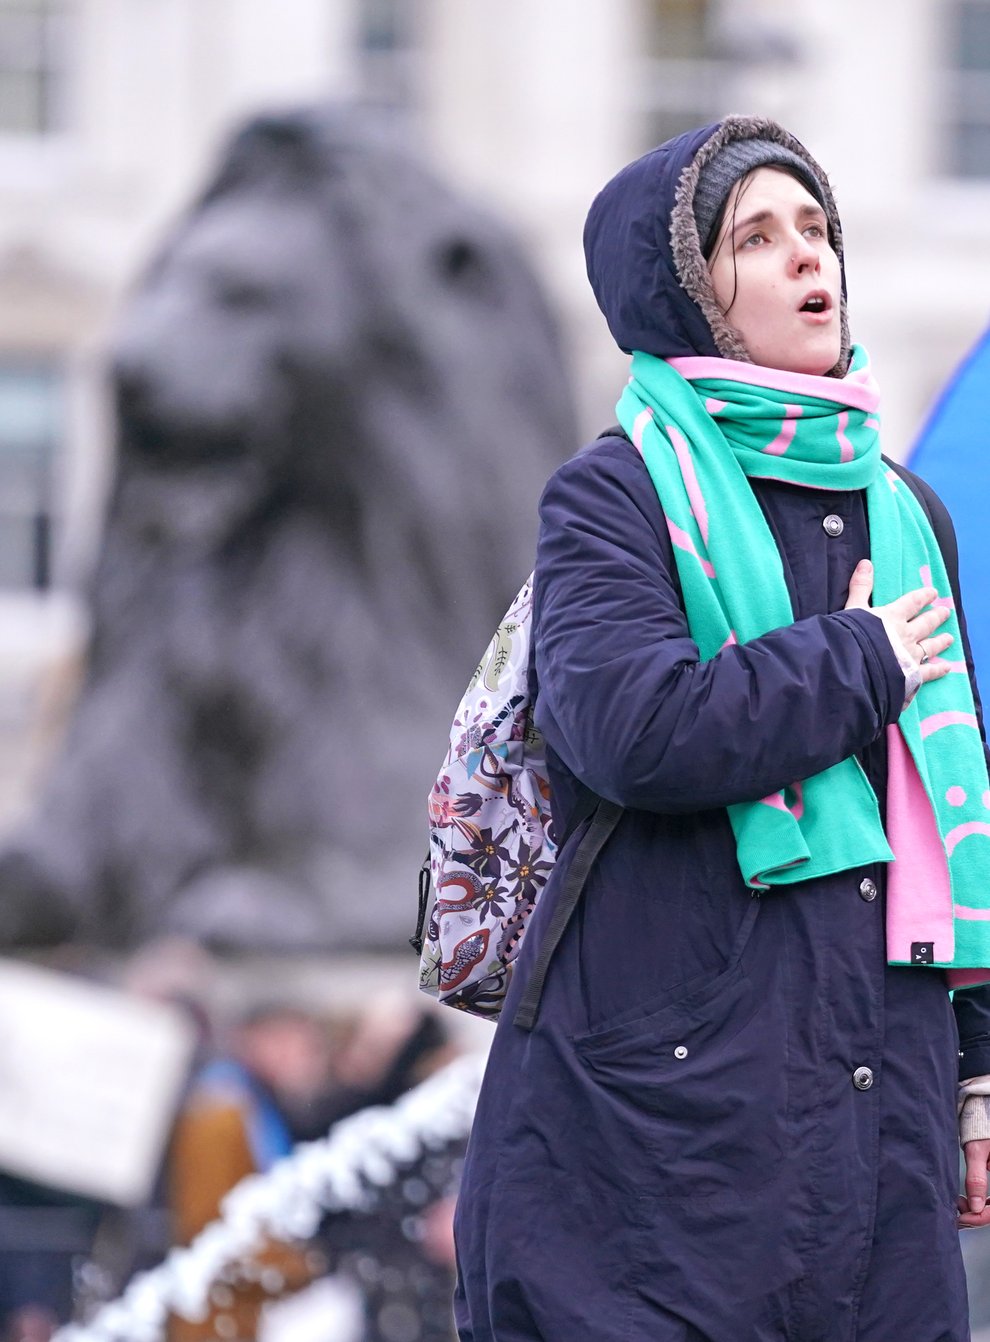 People take part in a demonstration in Trafalgar Square (Ian West/PA)